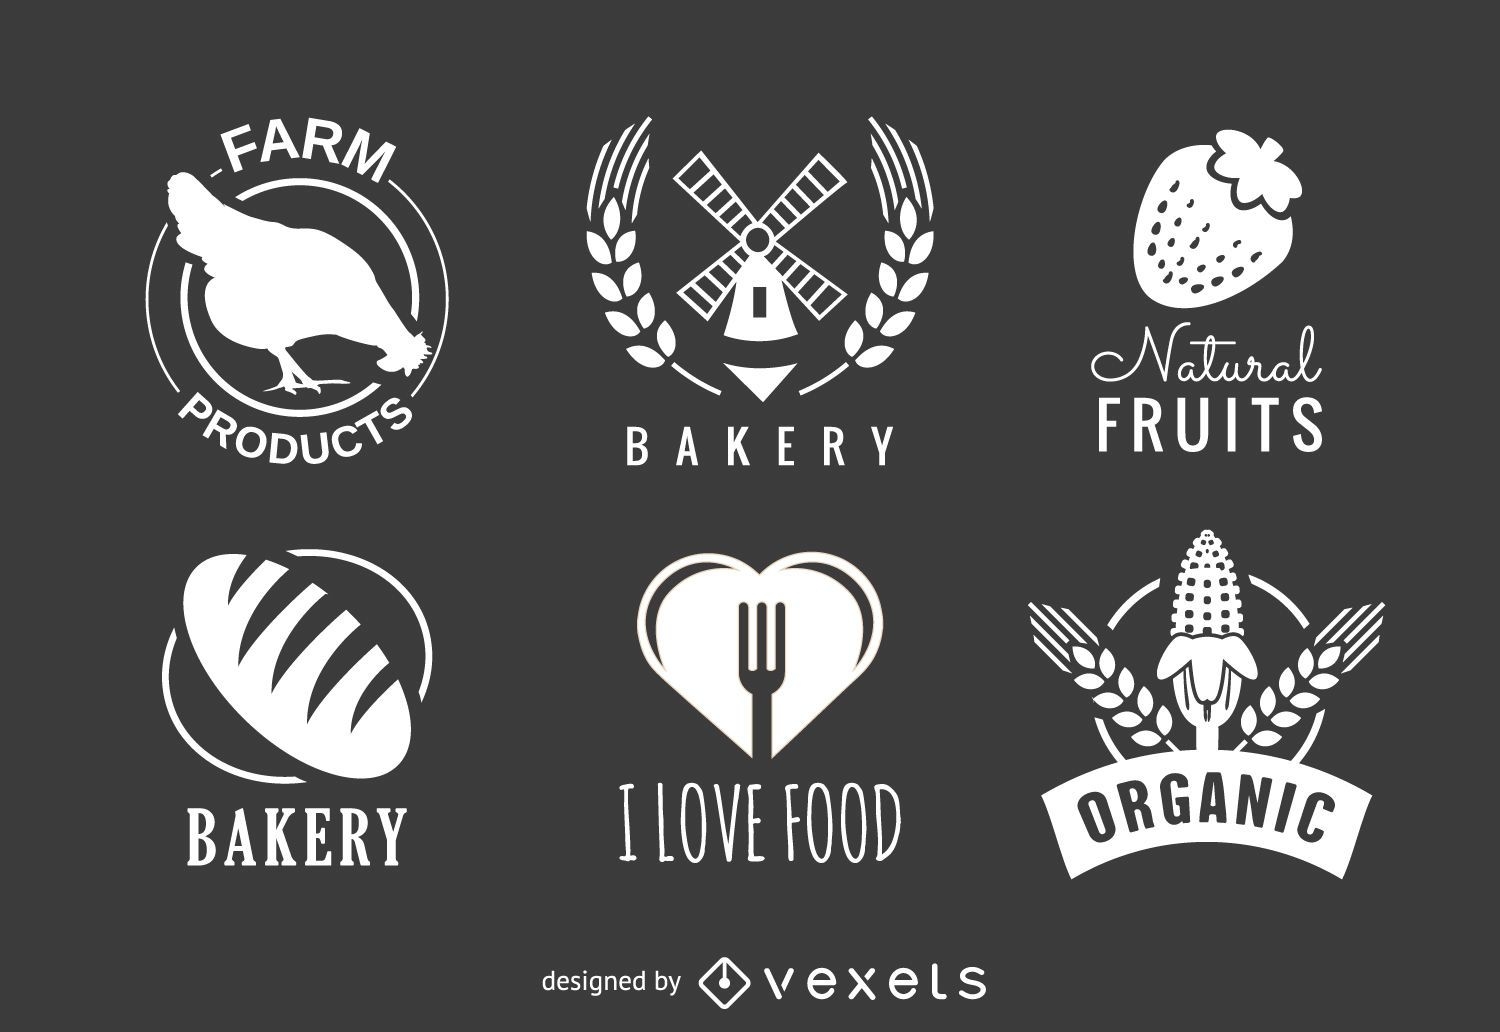 Bakery and organic badges set